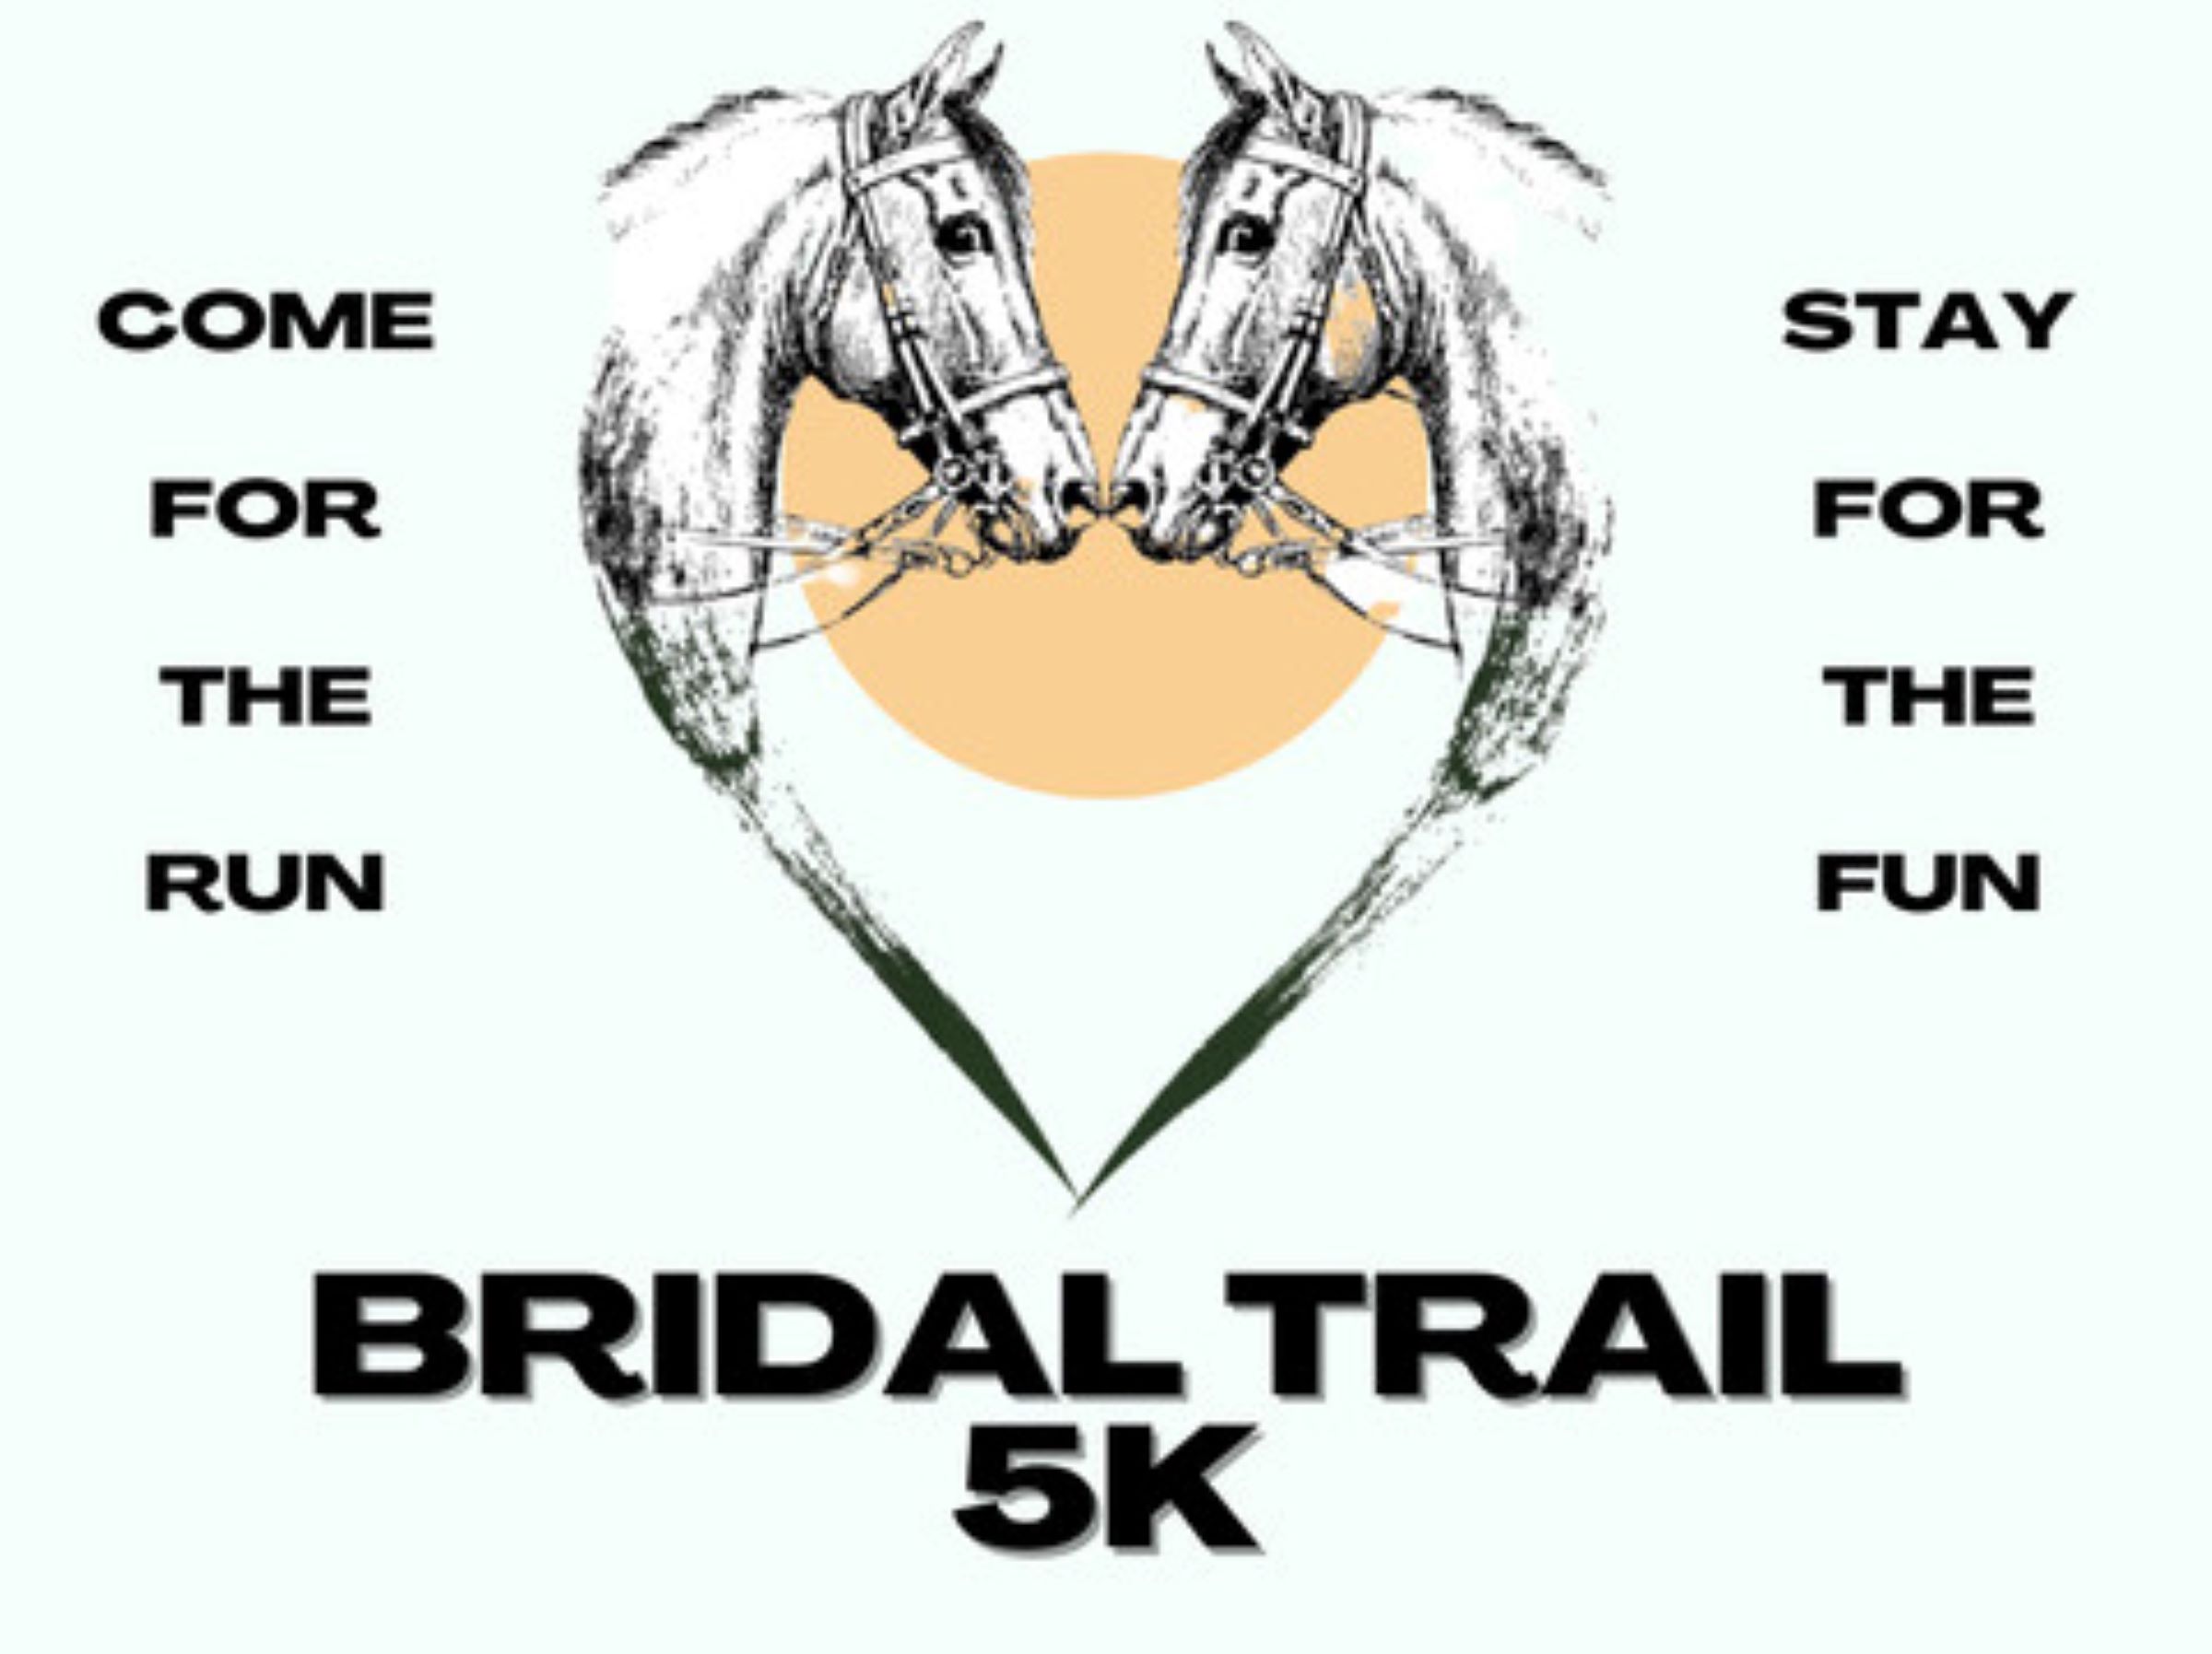 The Bridal Trail 5k